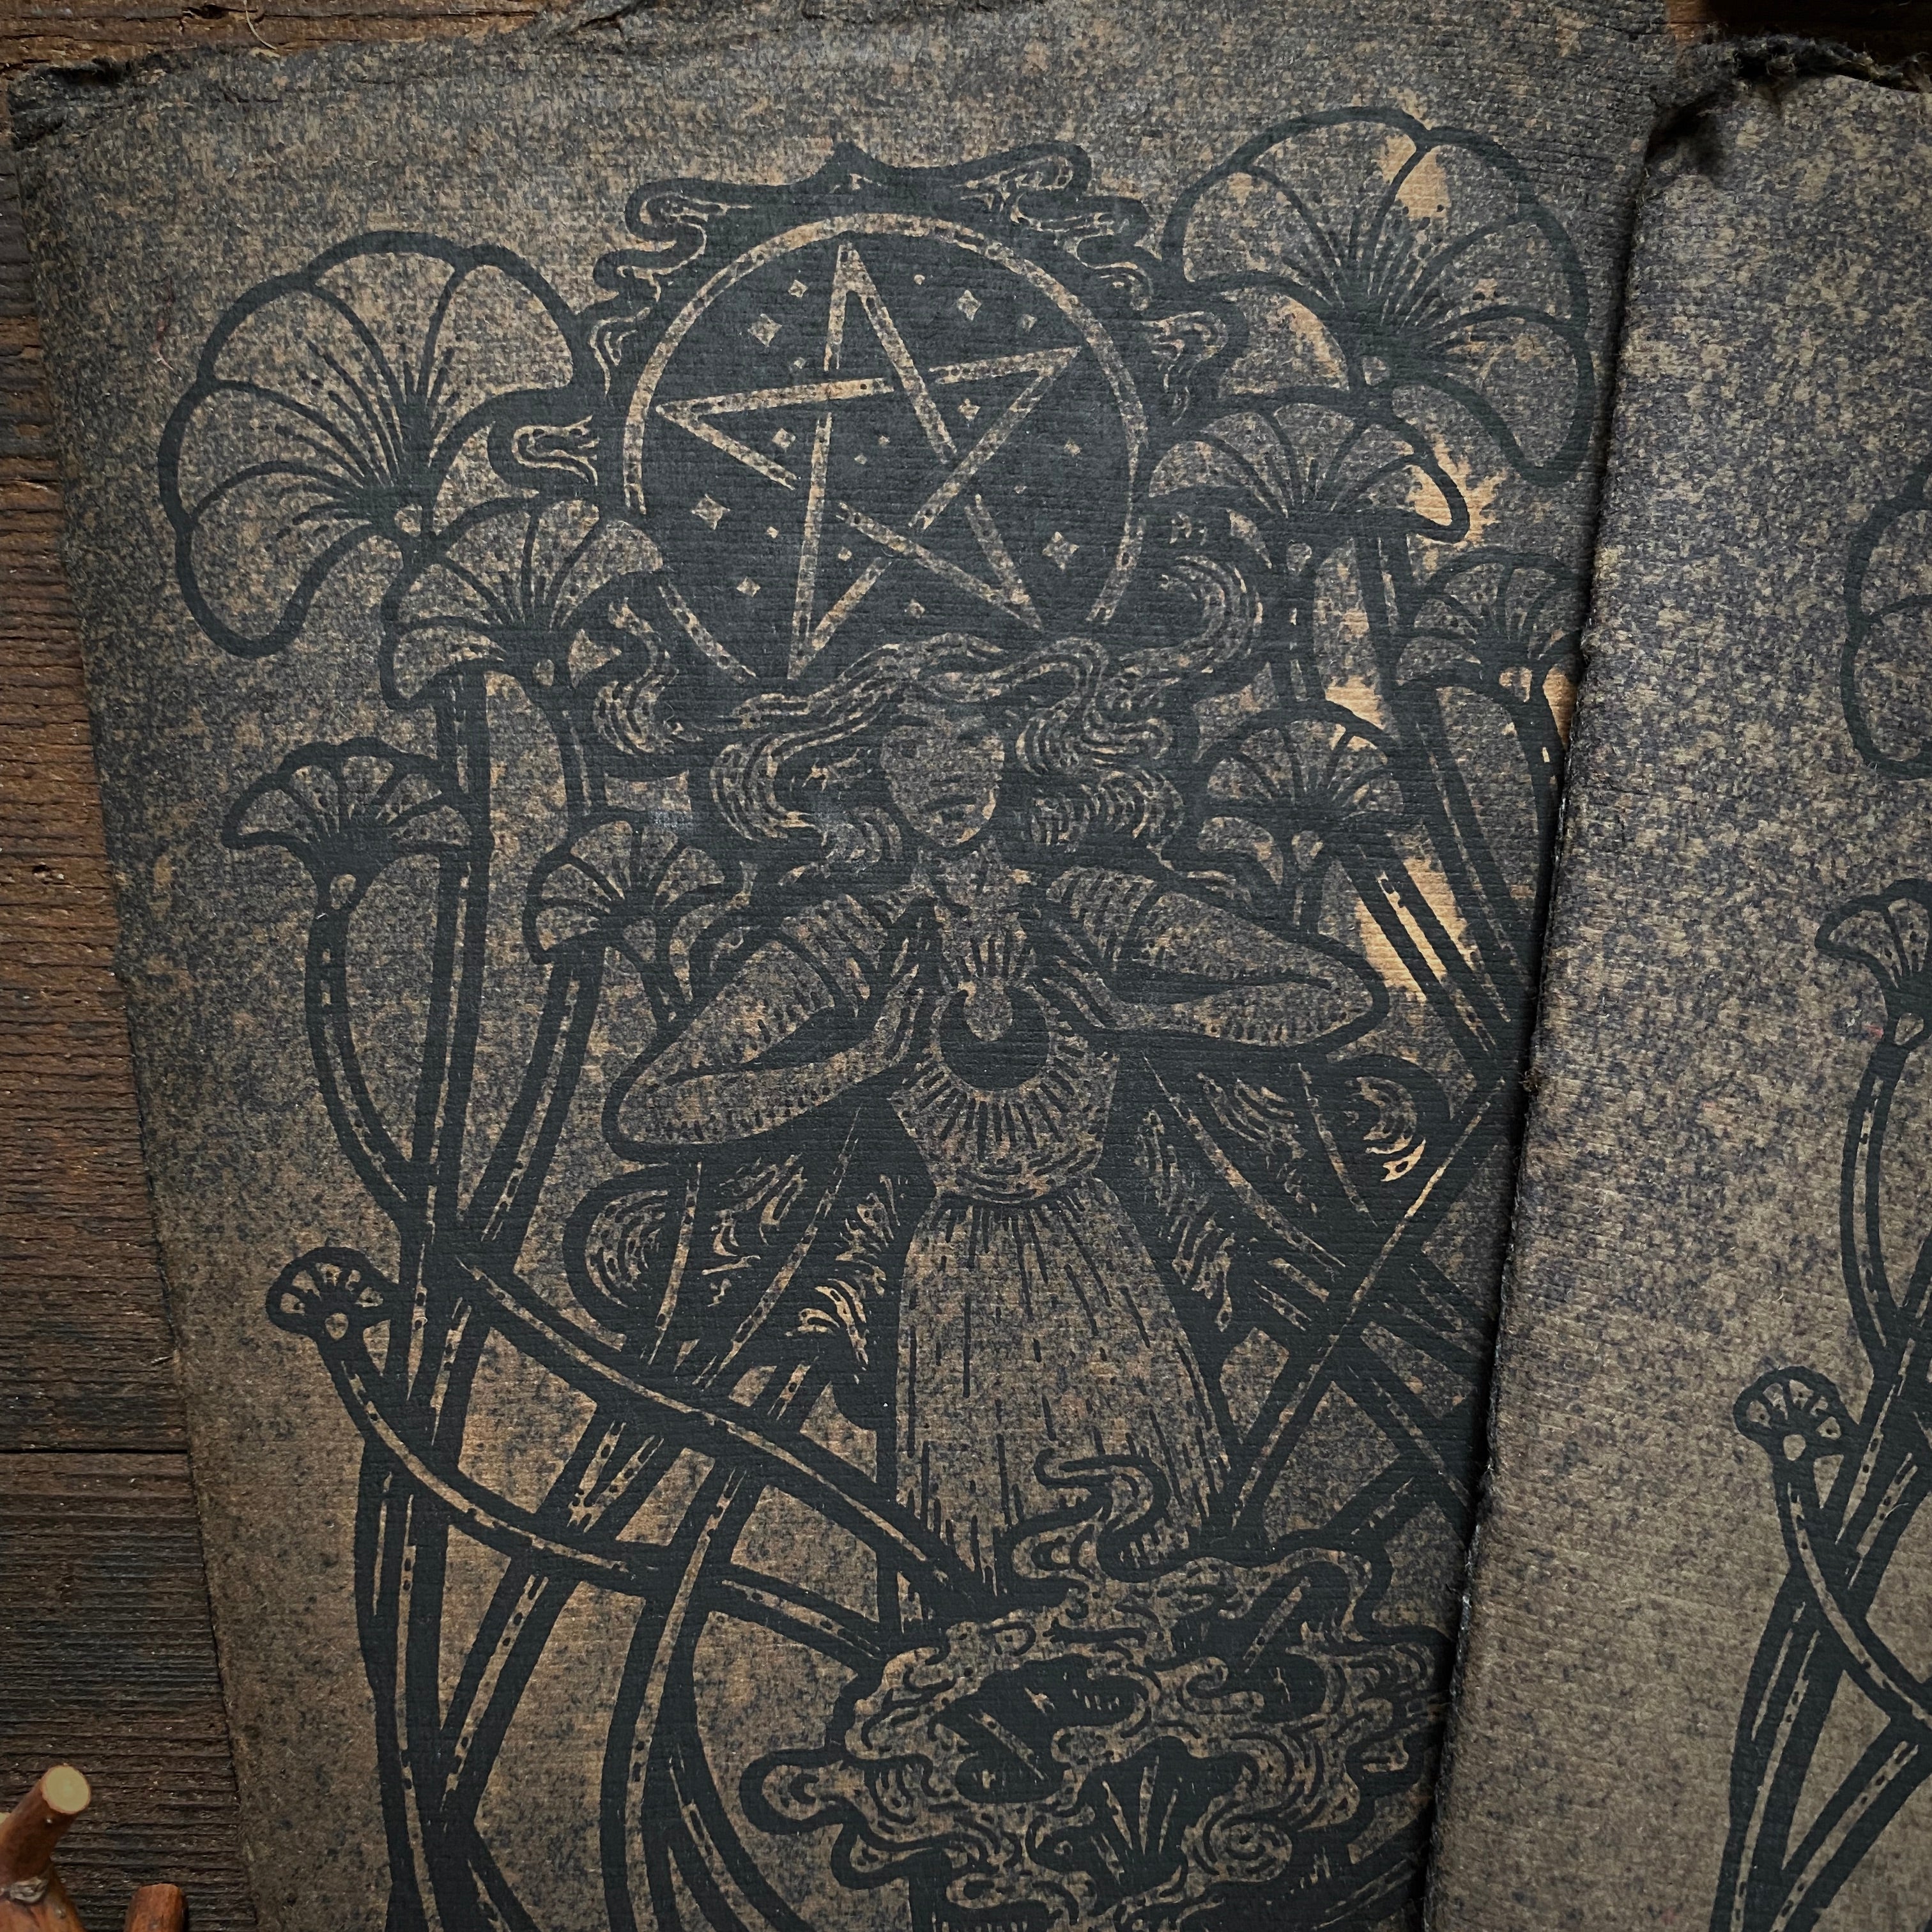 Studio Sorcery handmade journal in Crypt